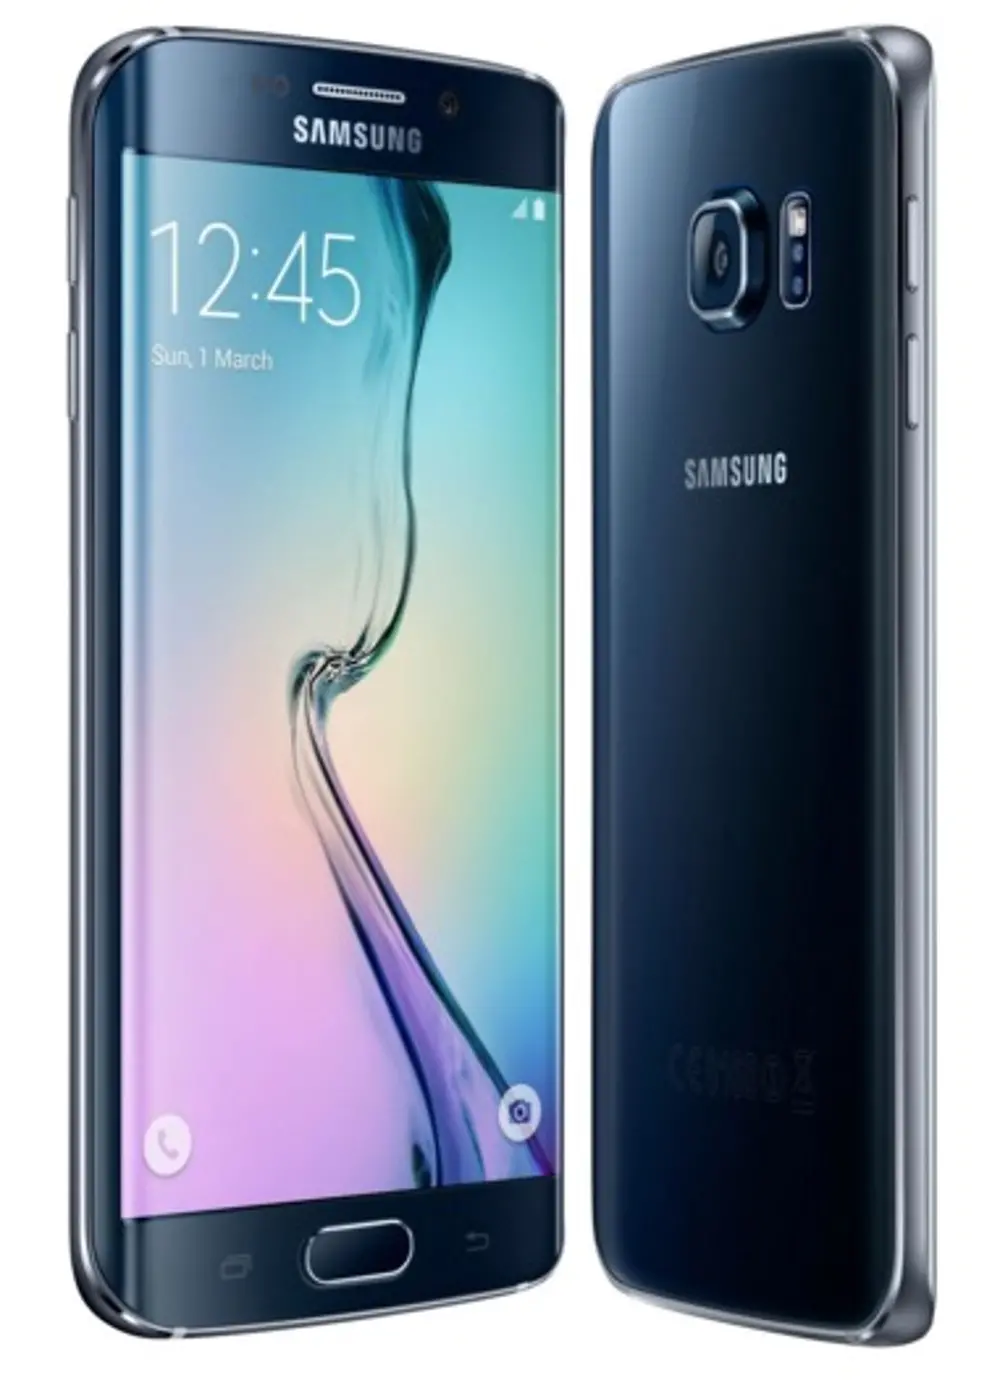 6750A Samsung Galaxy S6 Edge 32gb Black-1